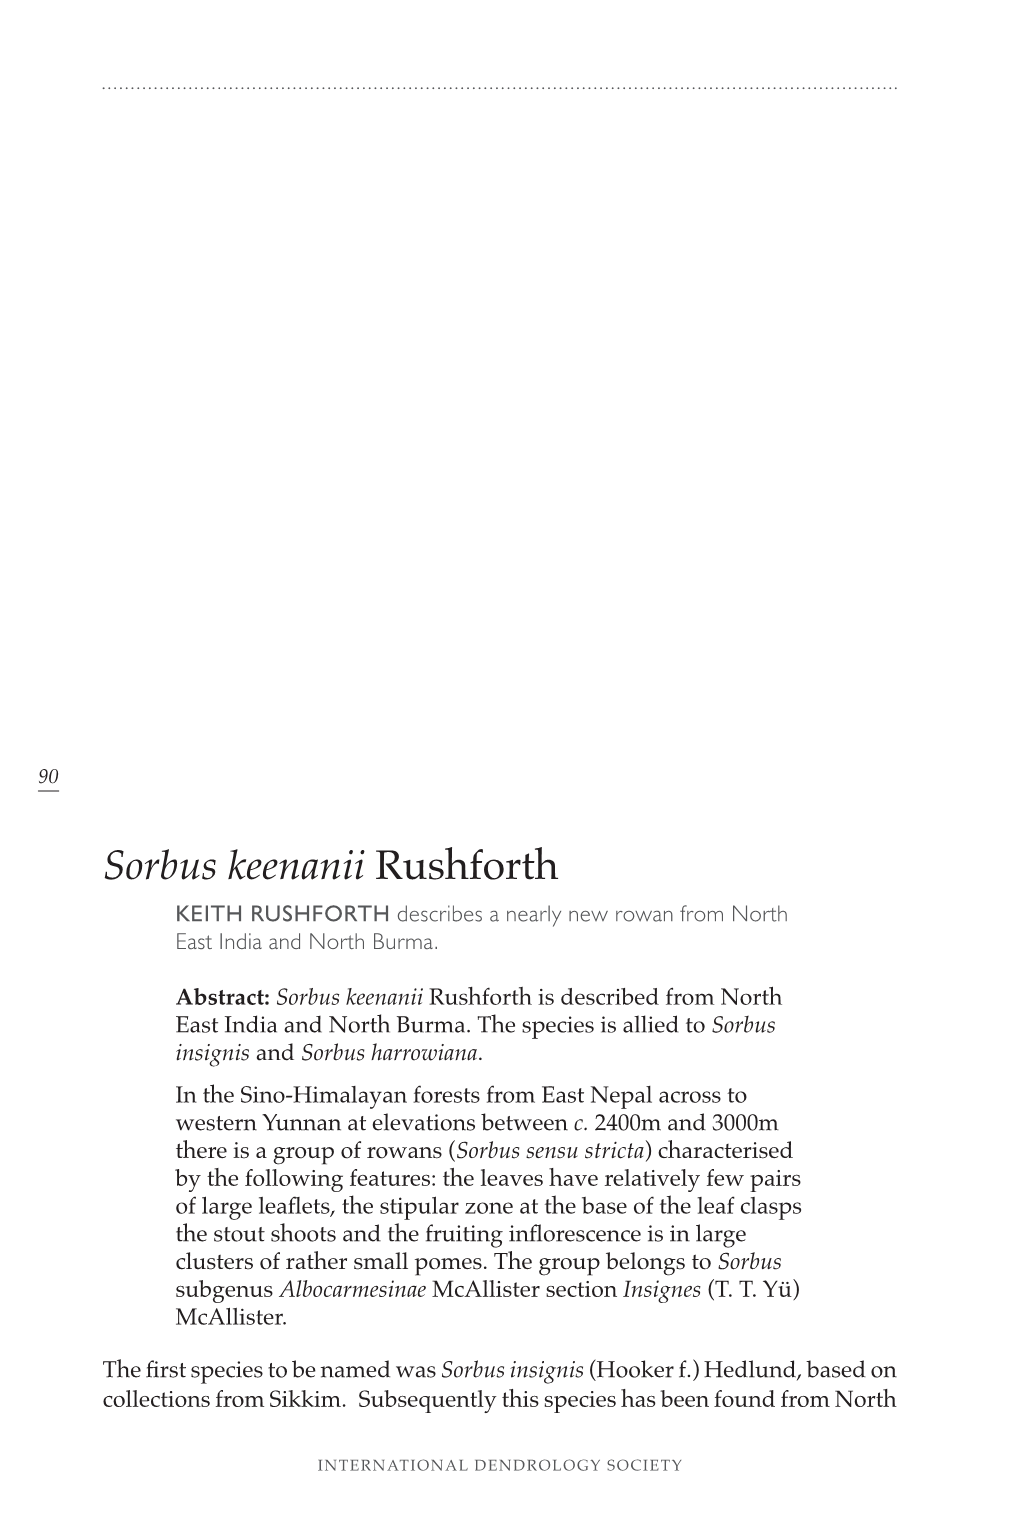 Sorbus Keenanii Rushforth KEITH RUSHFORTH Describes a Nearly New Rowan from North East India and North Burma